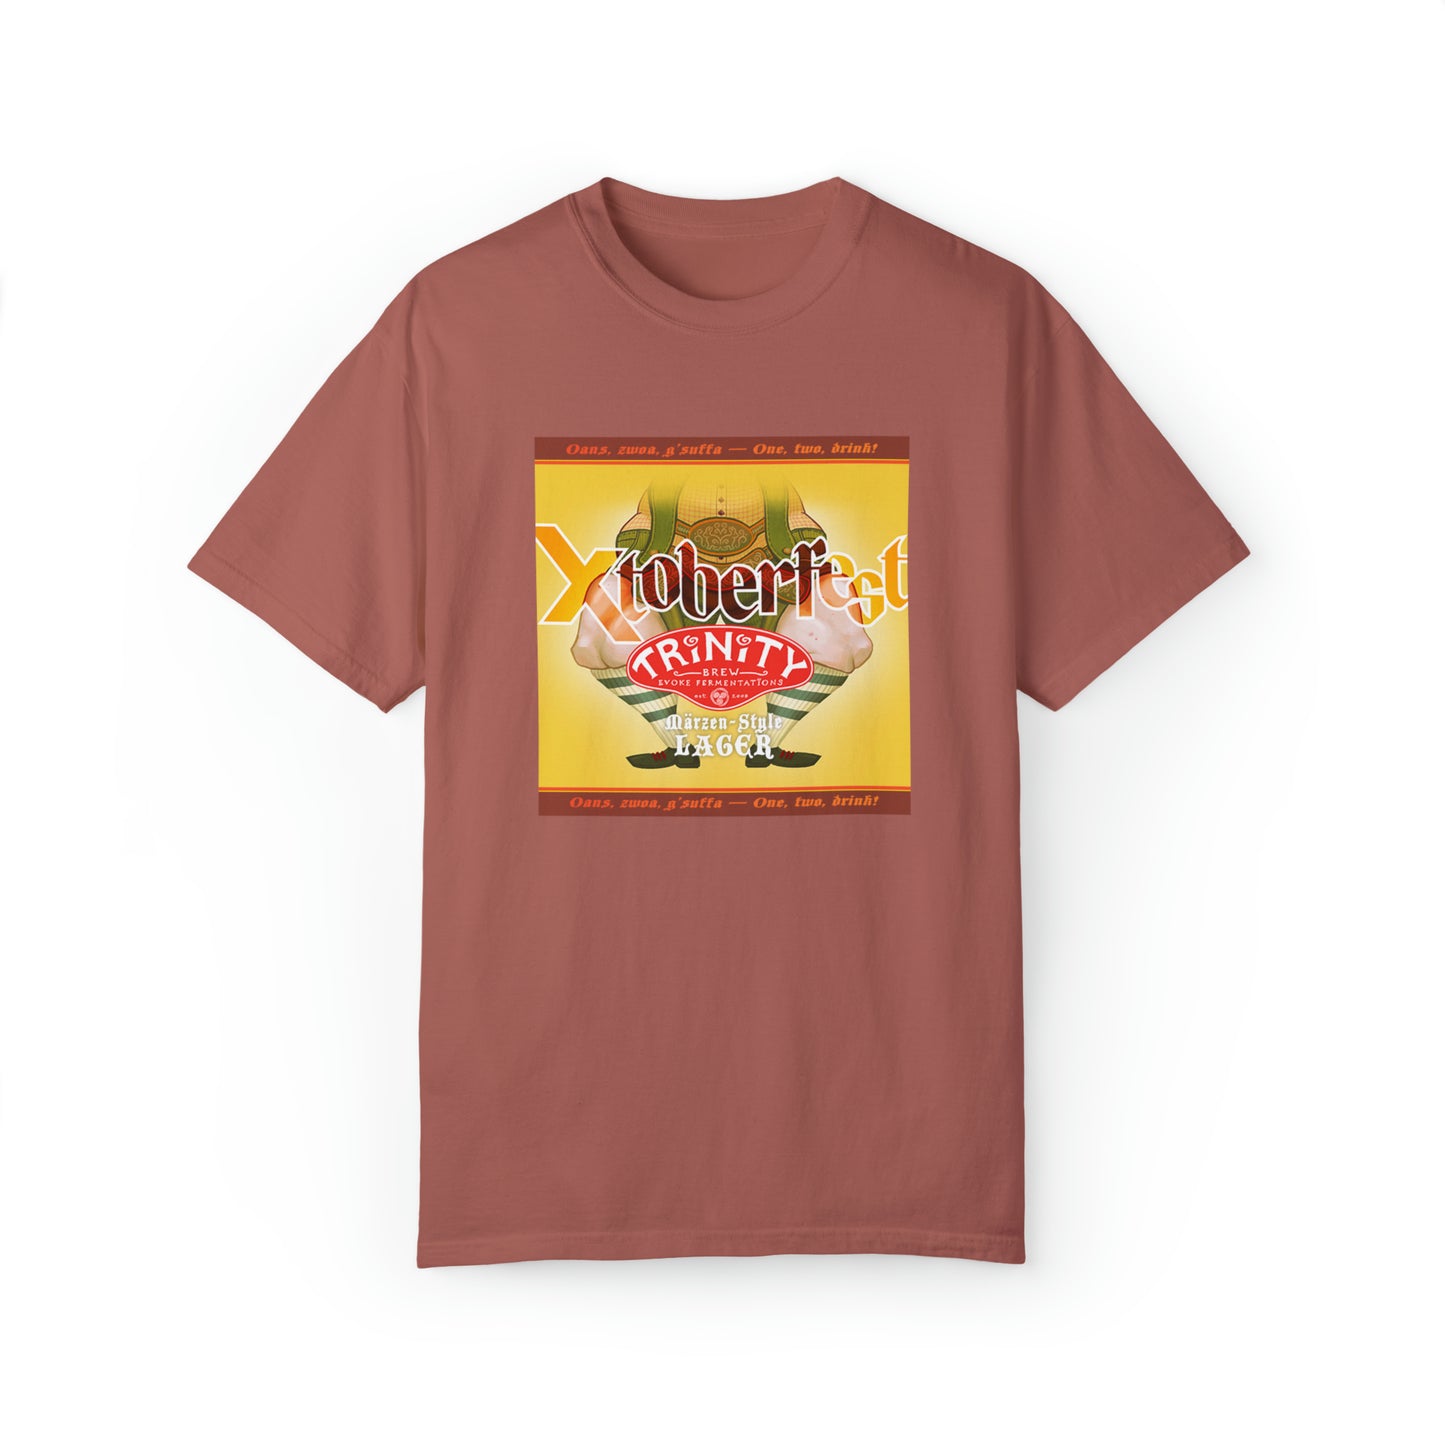 TRiNiTY Xtoberfest! T-Shirt (Lighter Colors) Oktoberfest Bier - Unisex Garment-Dyed T-shirt